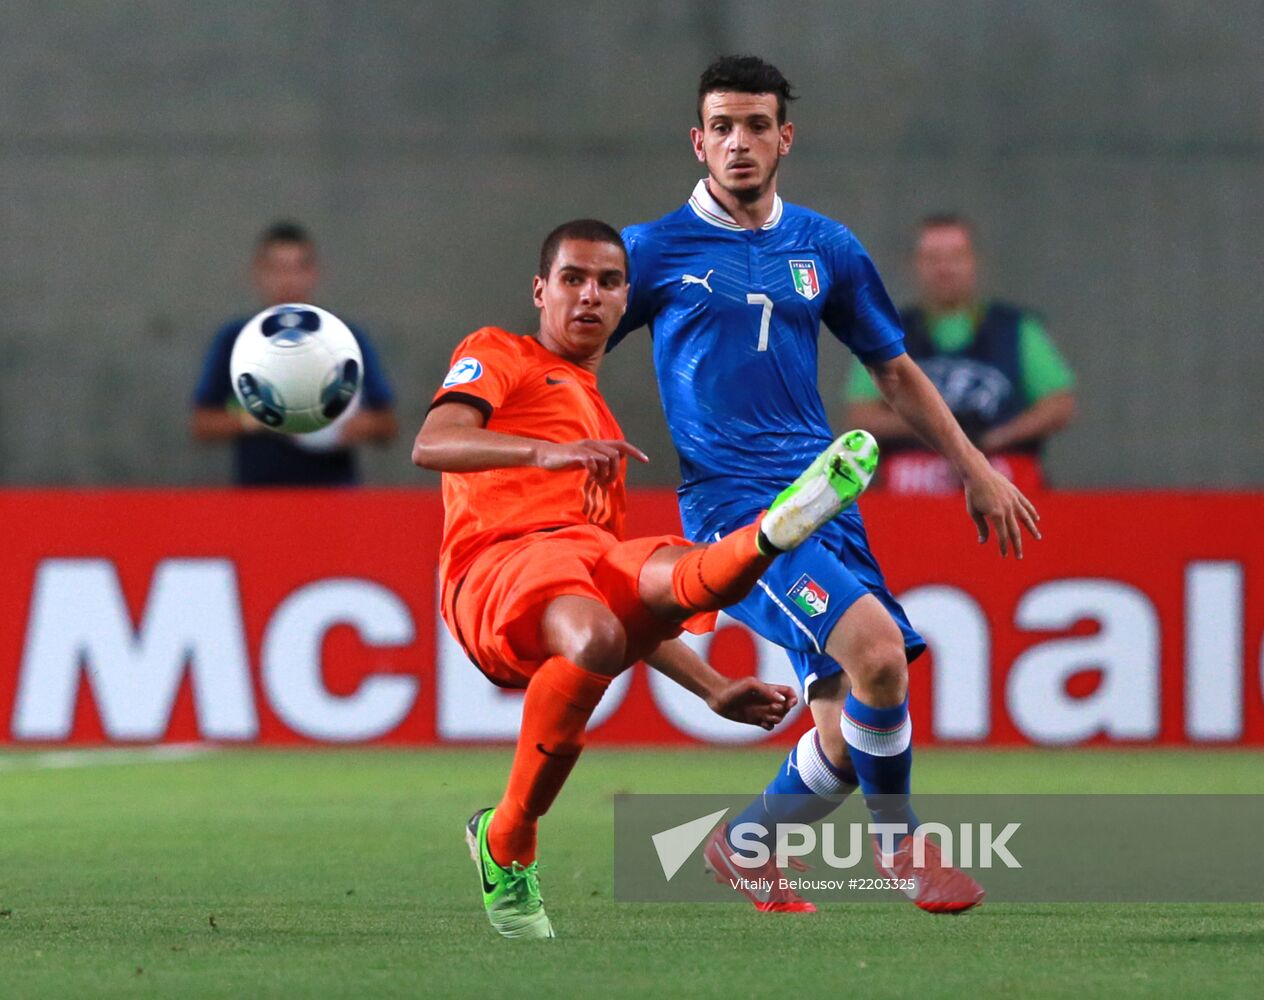 UEFA European U-21 Football Championship. Italy vs. Netherlands